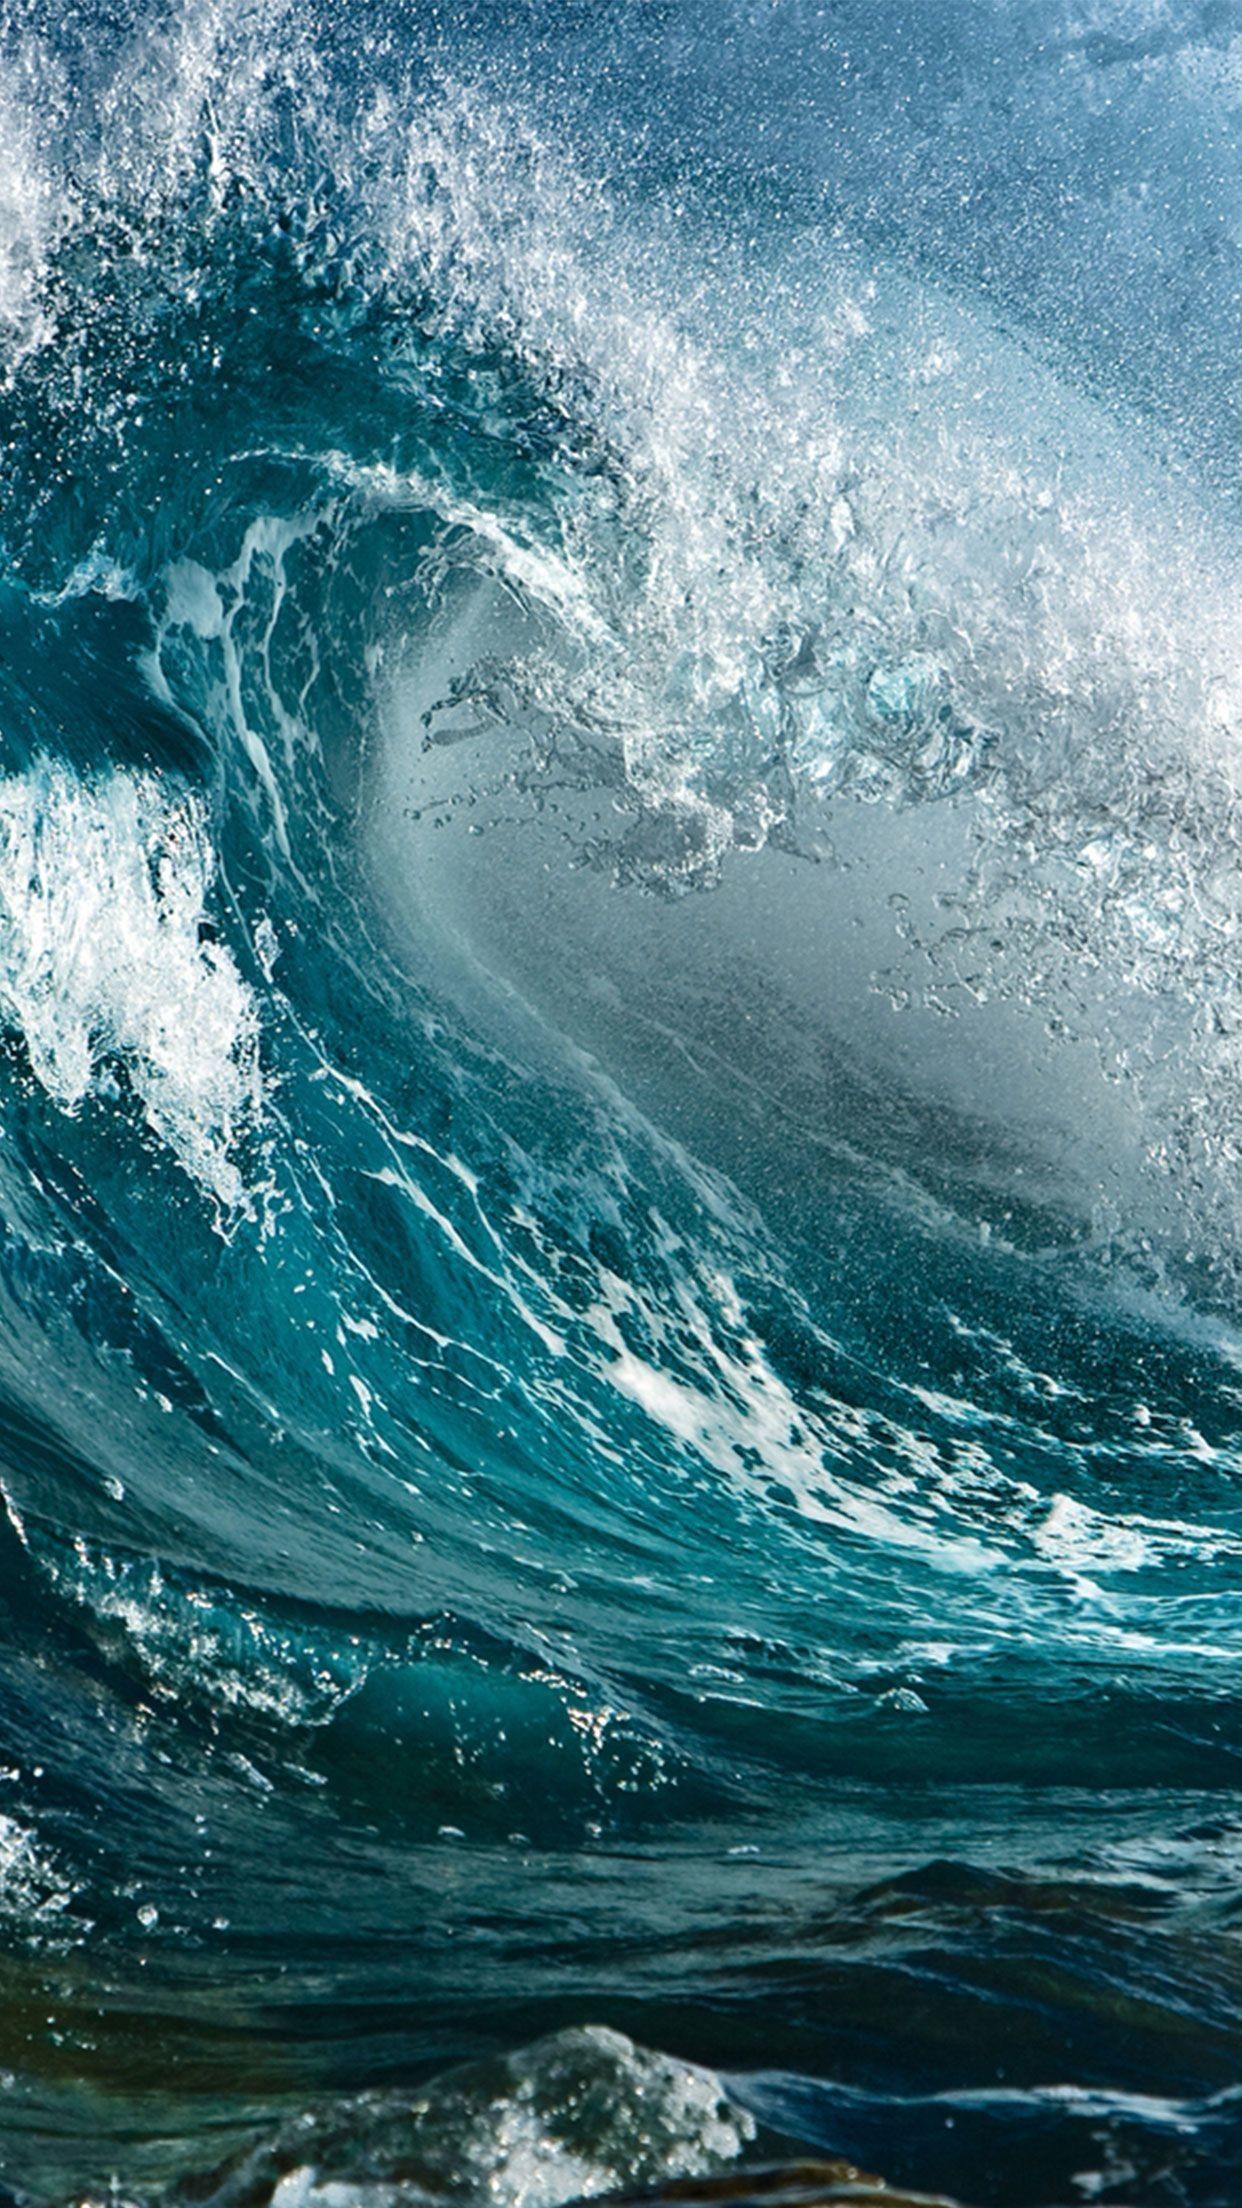 Ocean waves wallpaper. Waves wallpaper iphone, Ocean waves photography, Ocean waves